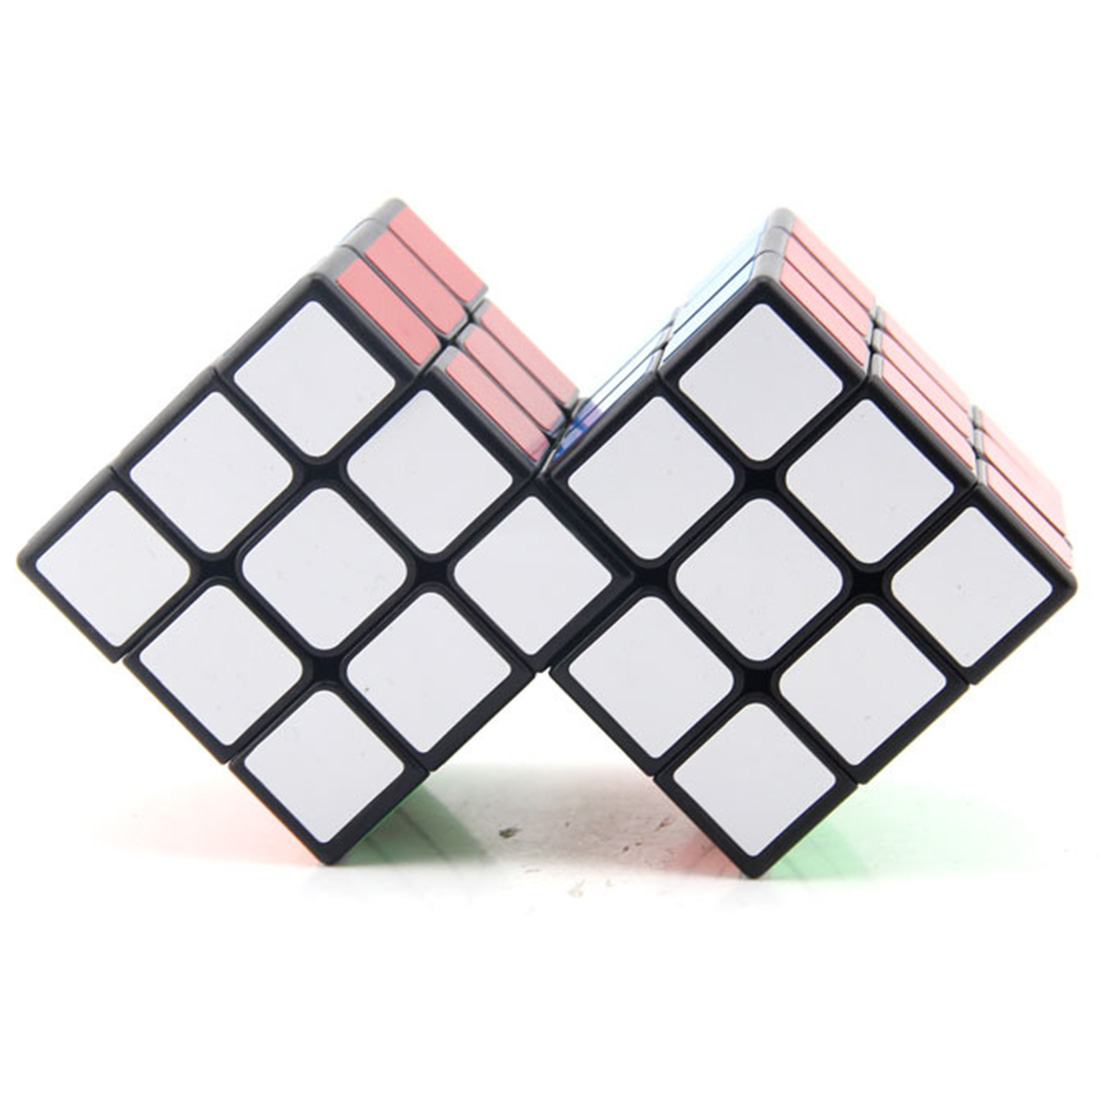 WitEden 3x3 Double Magic Cube